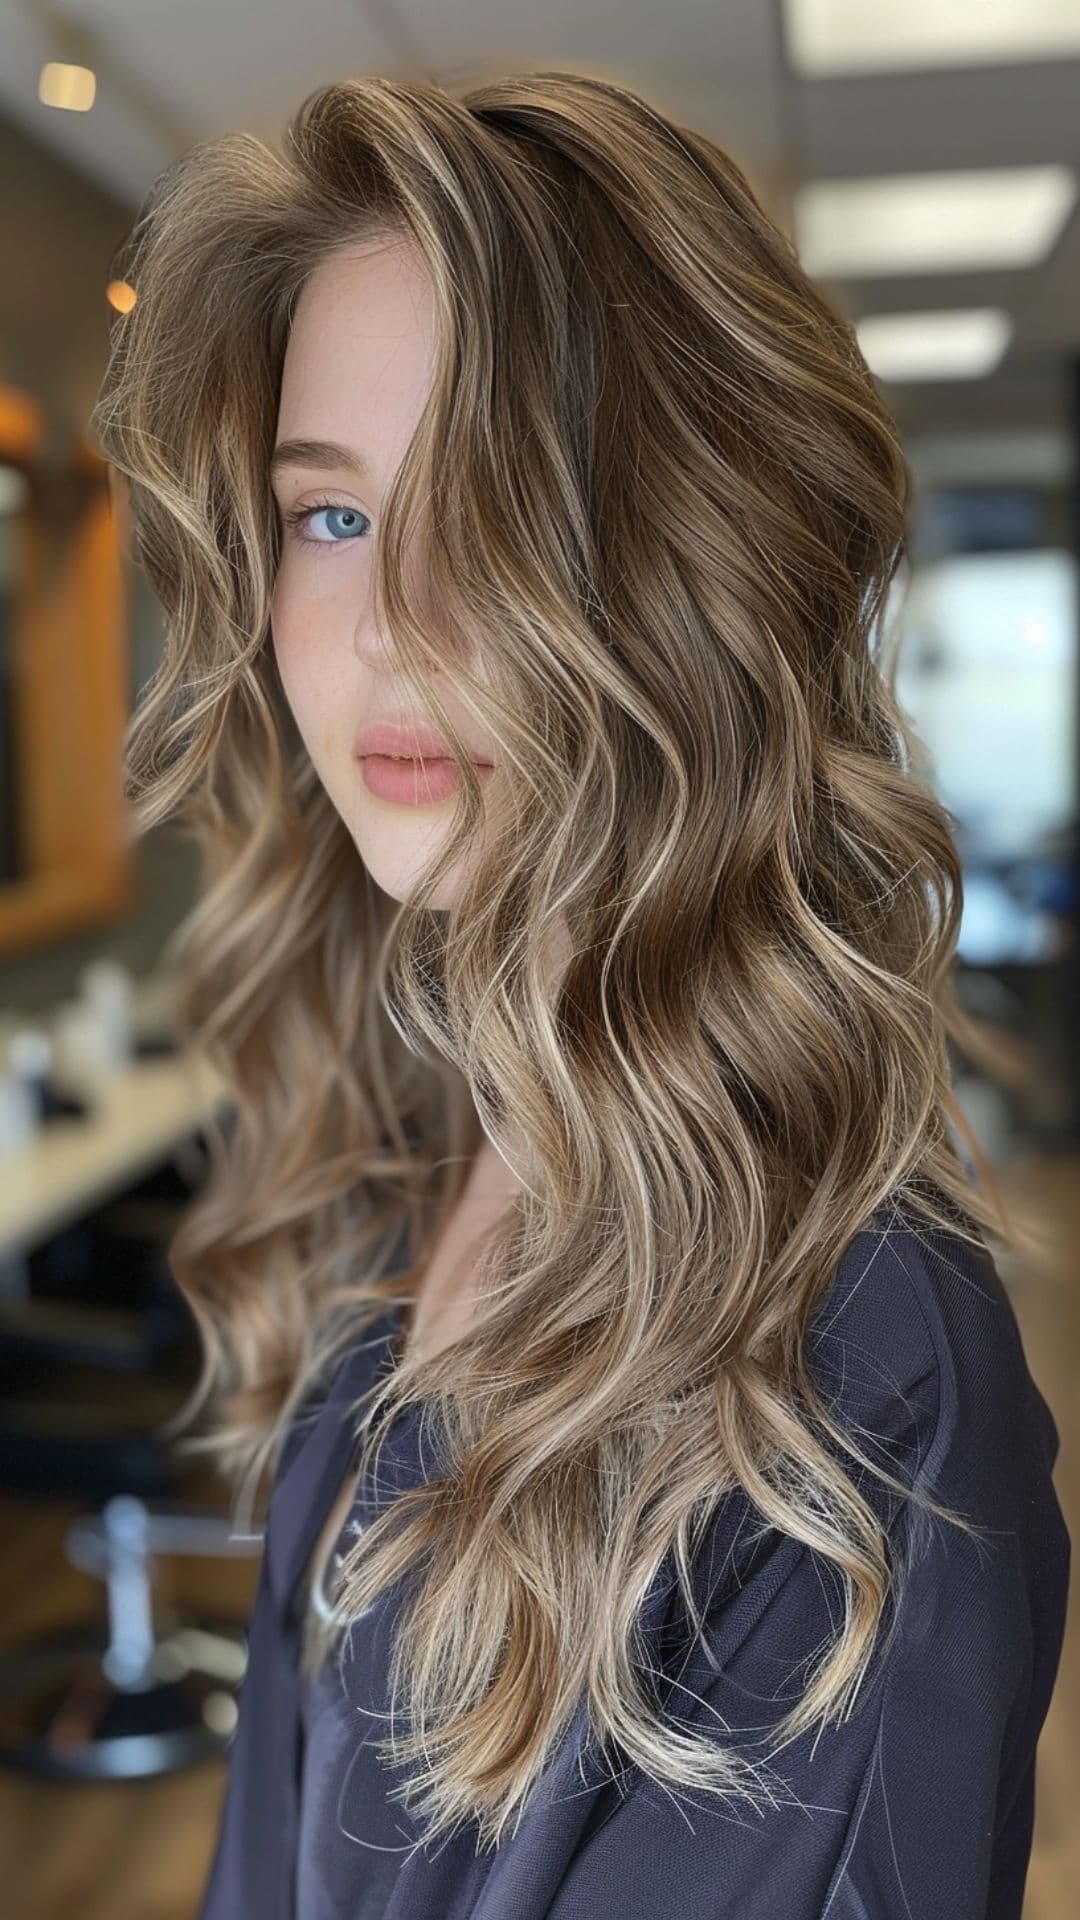 A woman modelling a brown blonde hair.